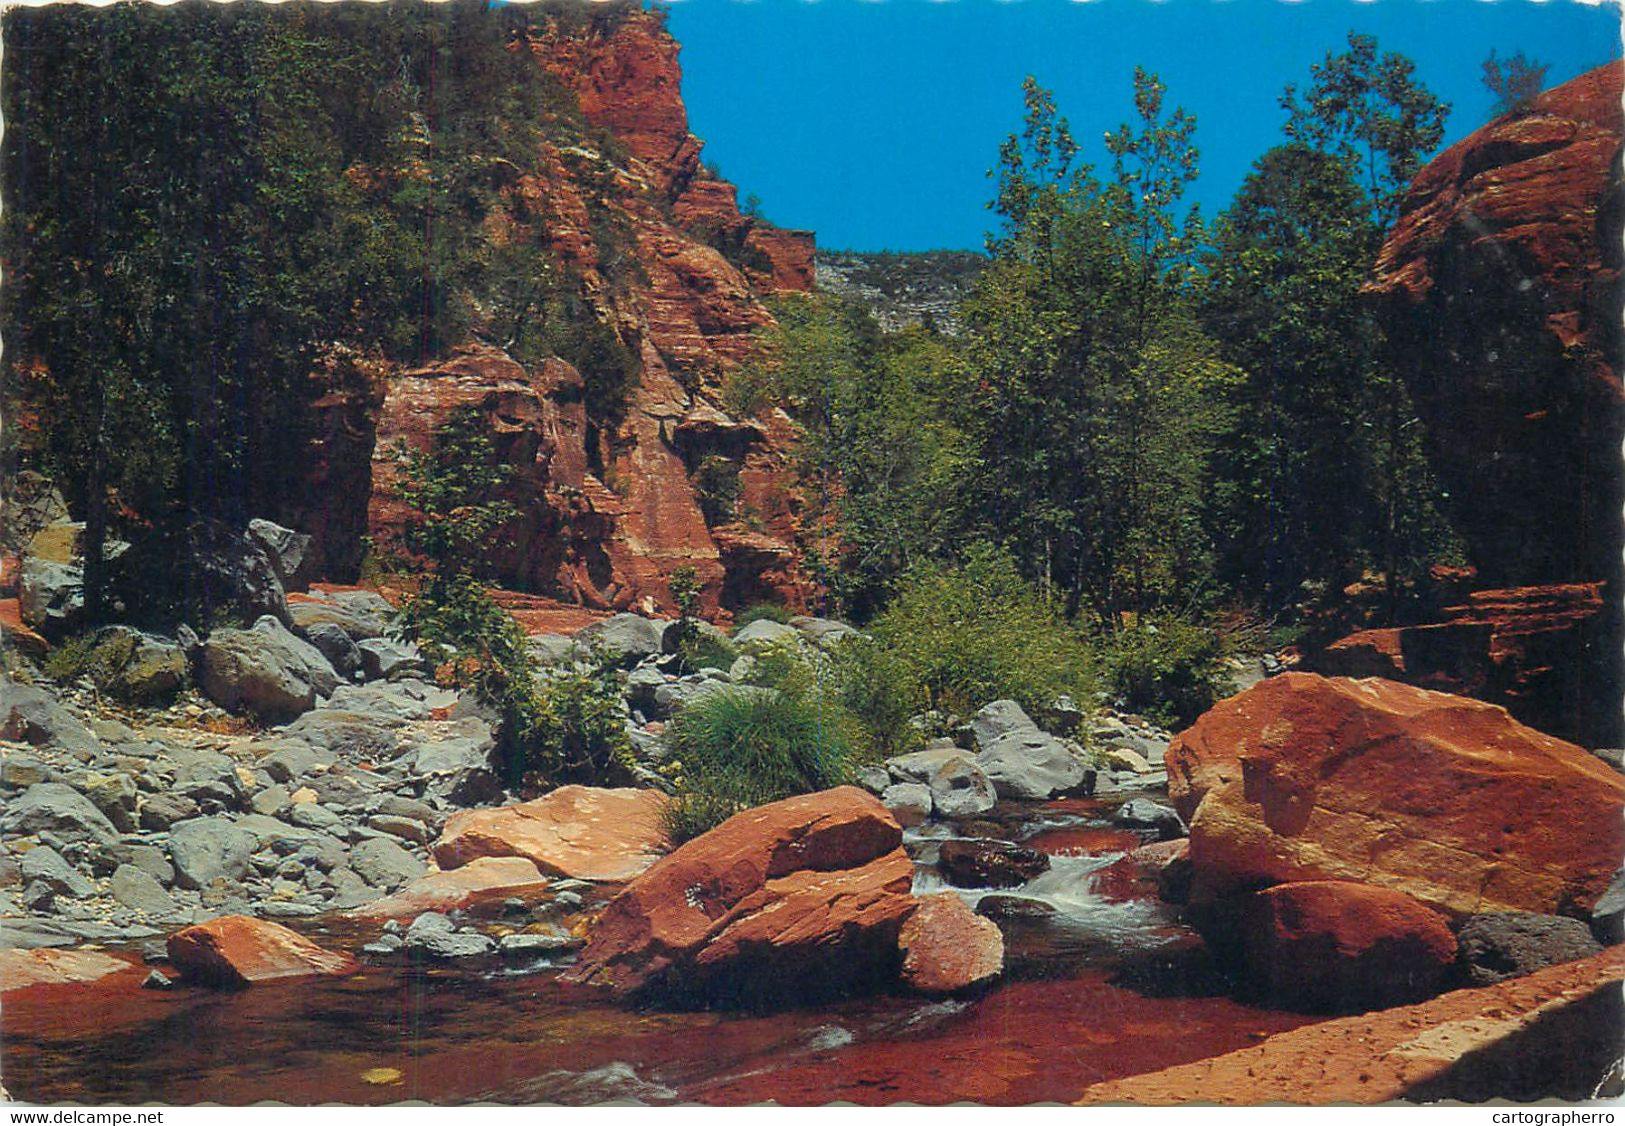 USA Oak Creek Canyon AZ Picturesque Natural Landscape - Albuquerque